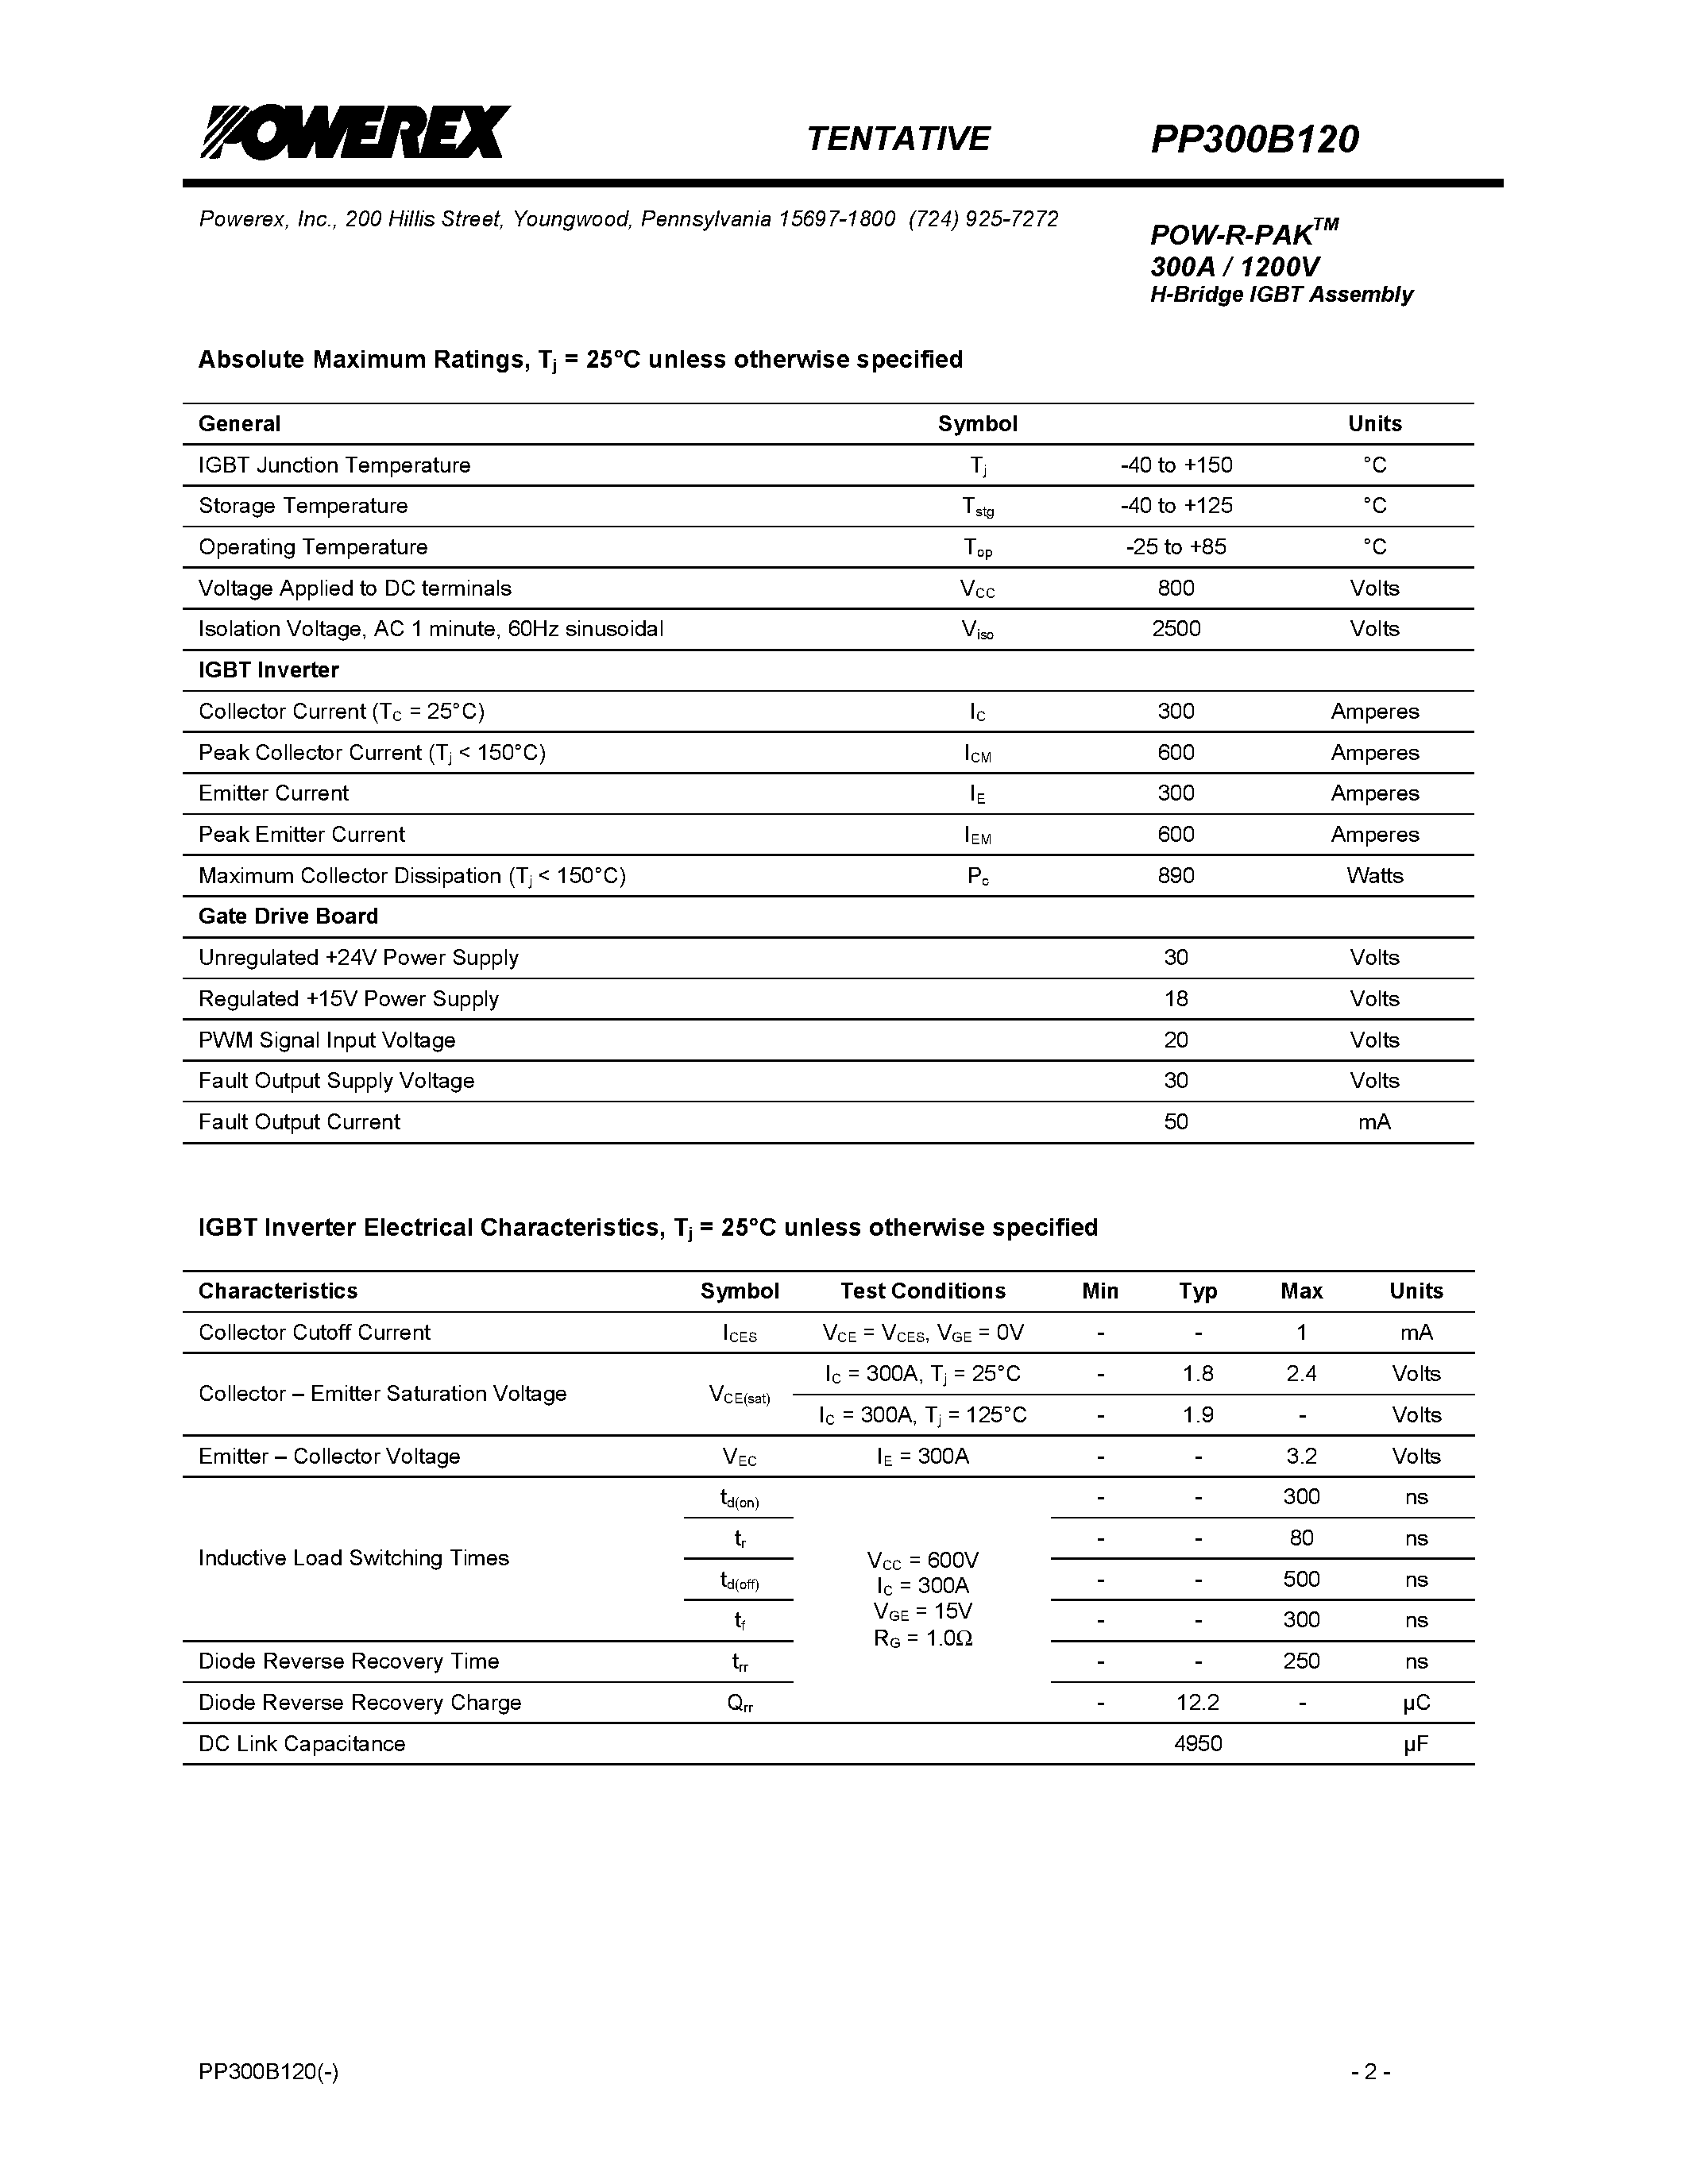 Datasheet PP300B120 - POW-R-PAK 300A / 1200V H-Bridge IGBT Assembly page 2